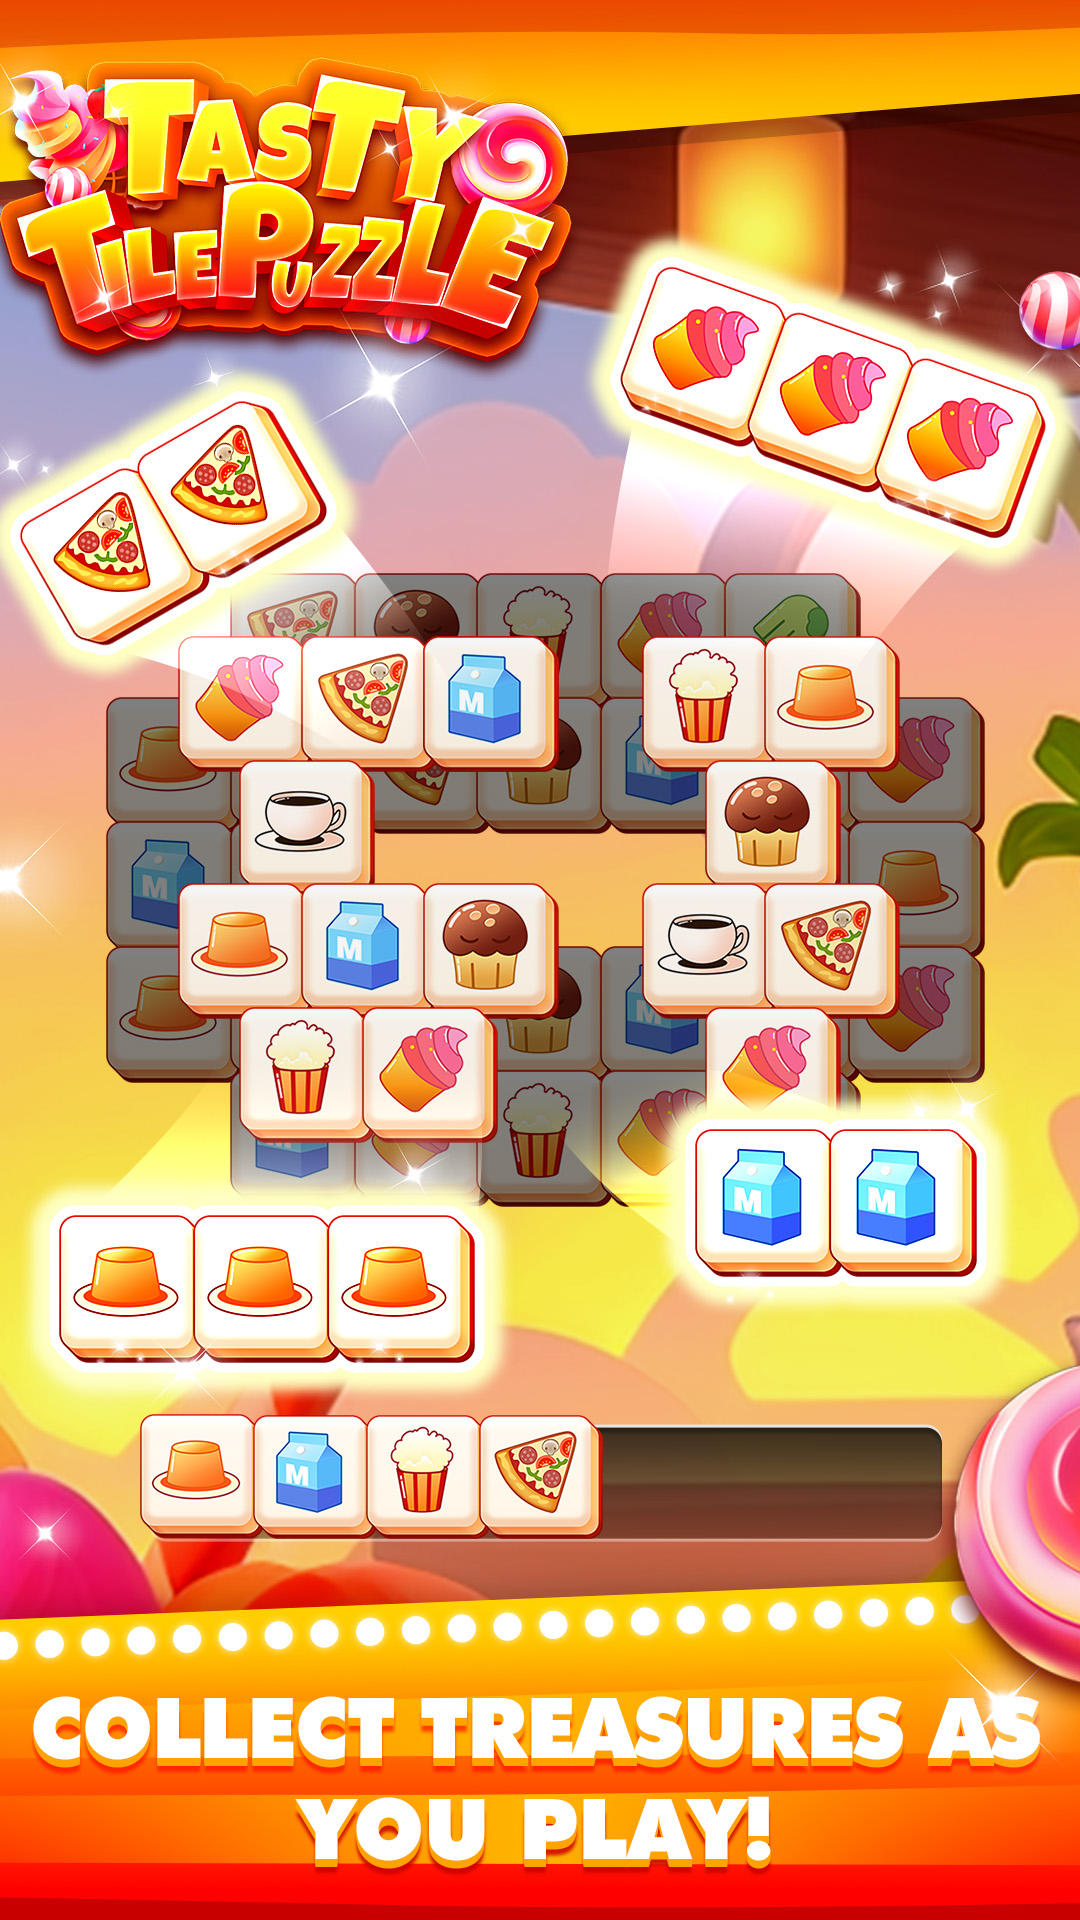 Screenshot of Tasty Tile Puzzle